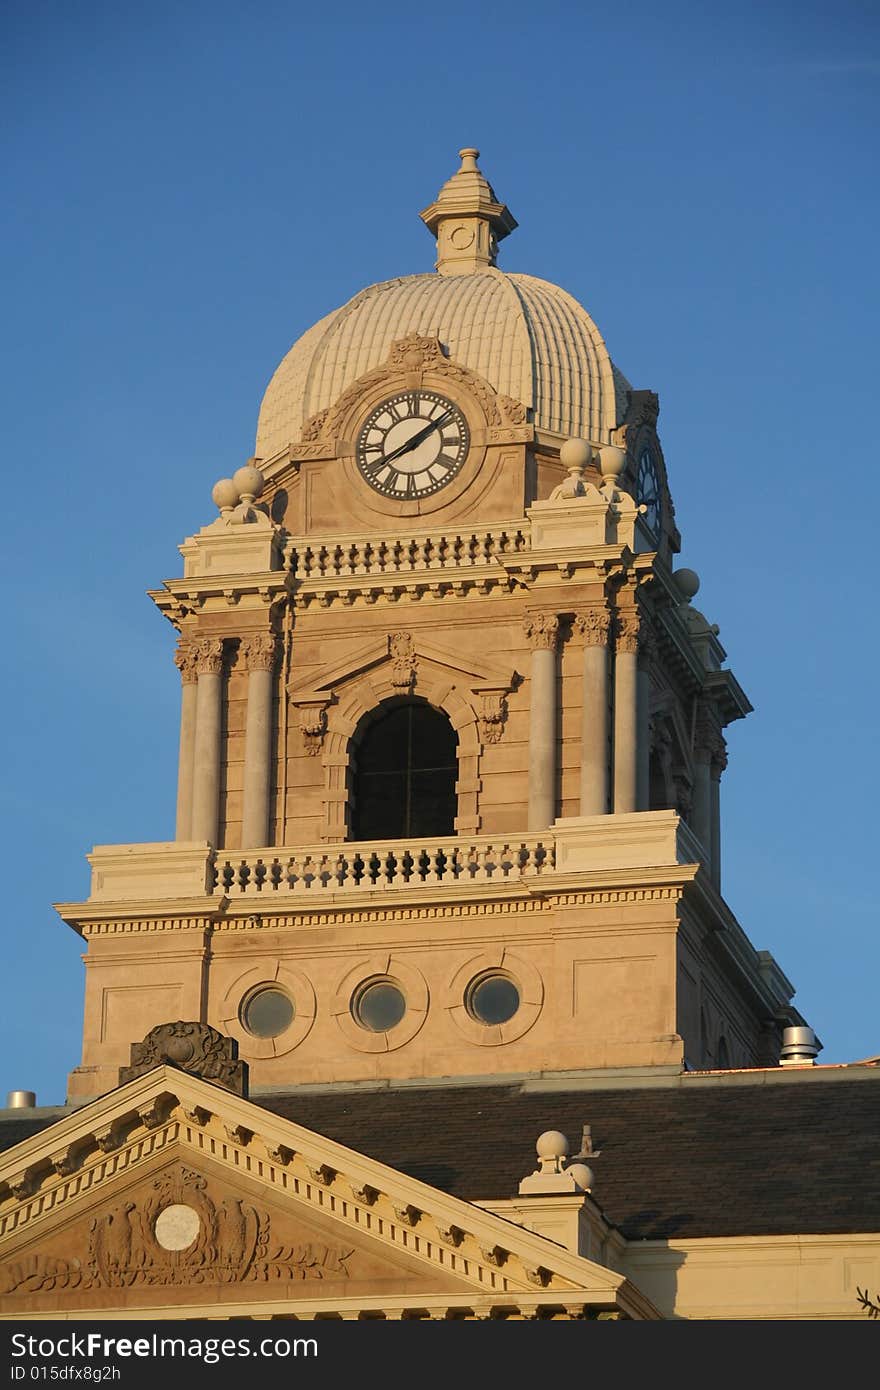 Courthouse Clocktower in Corunna, Michigan.